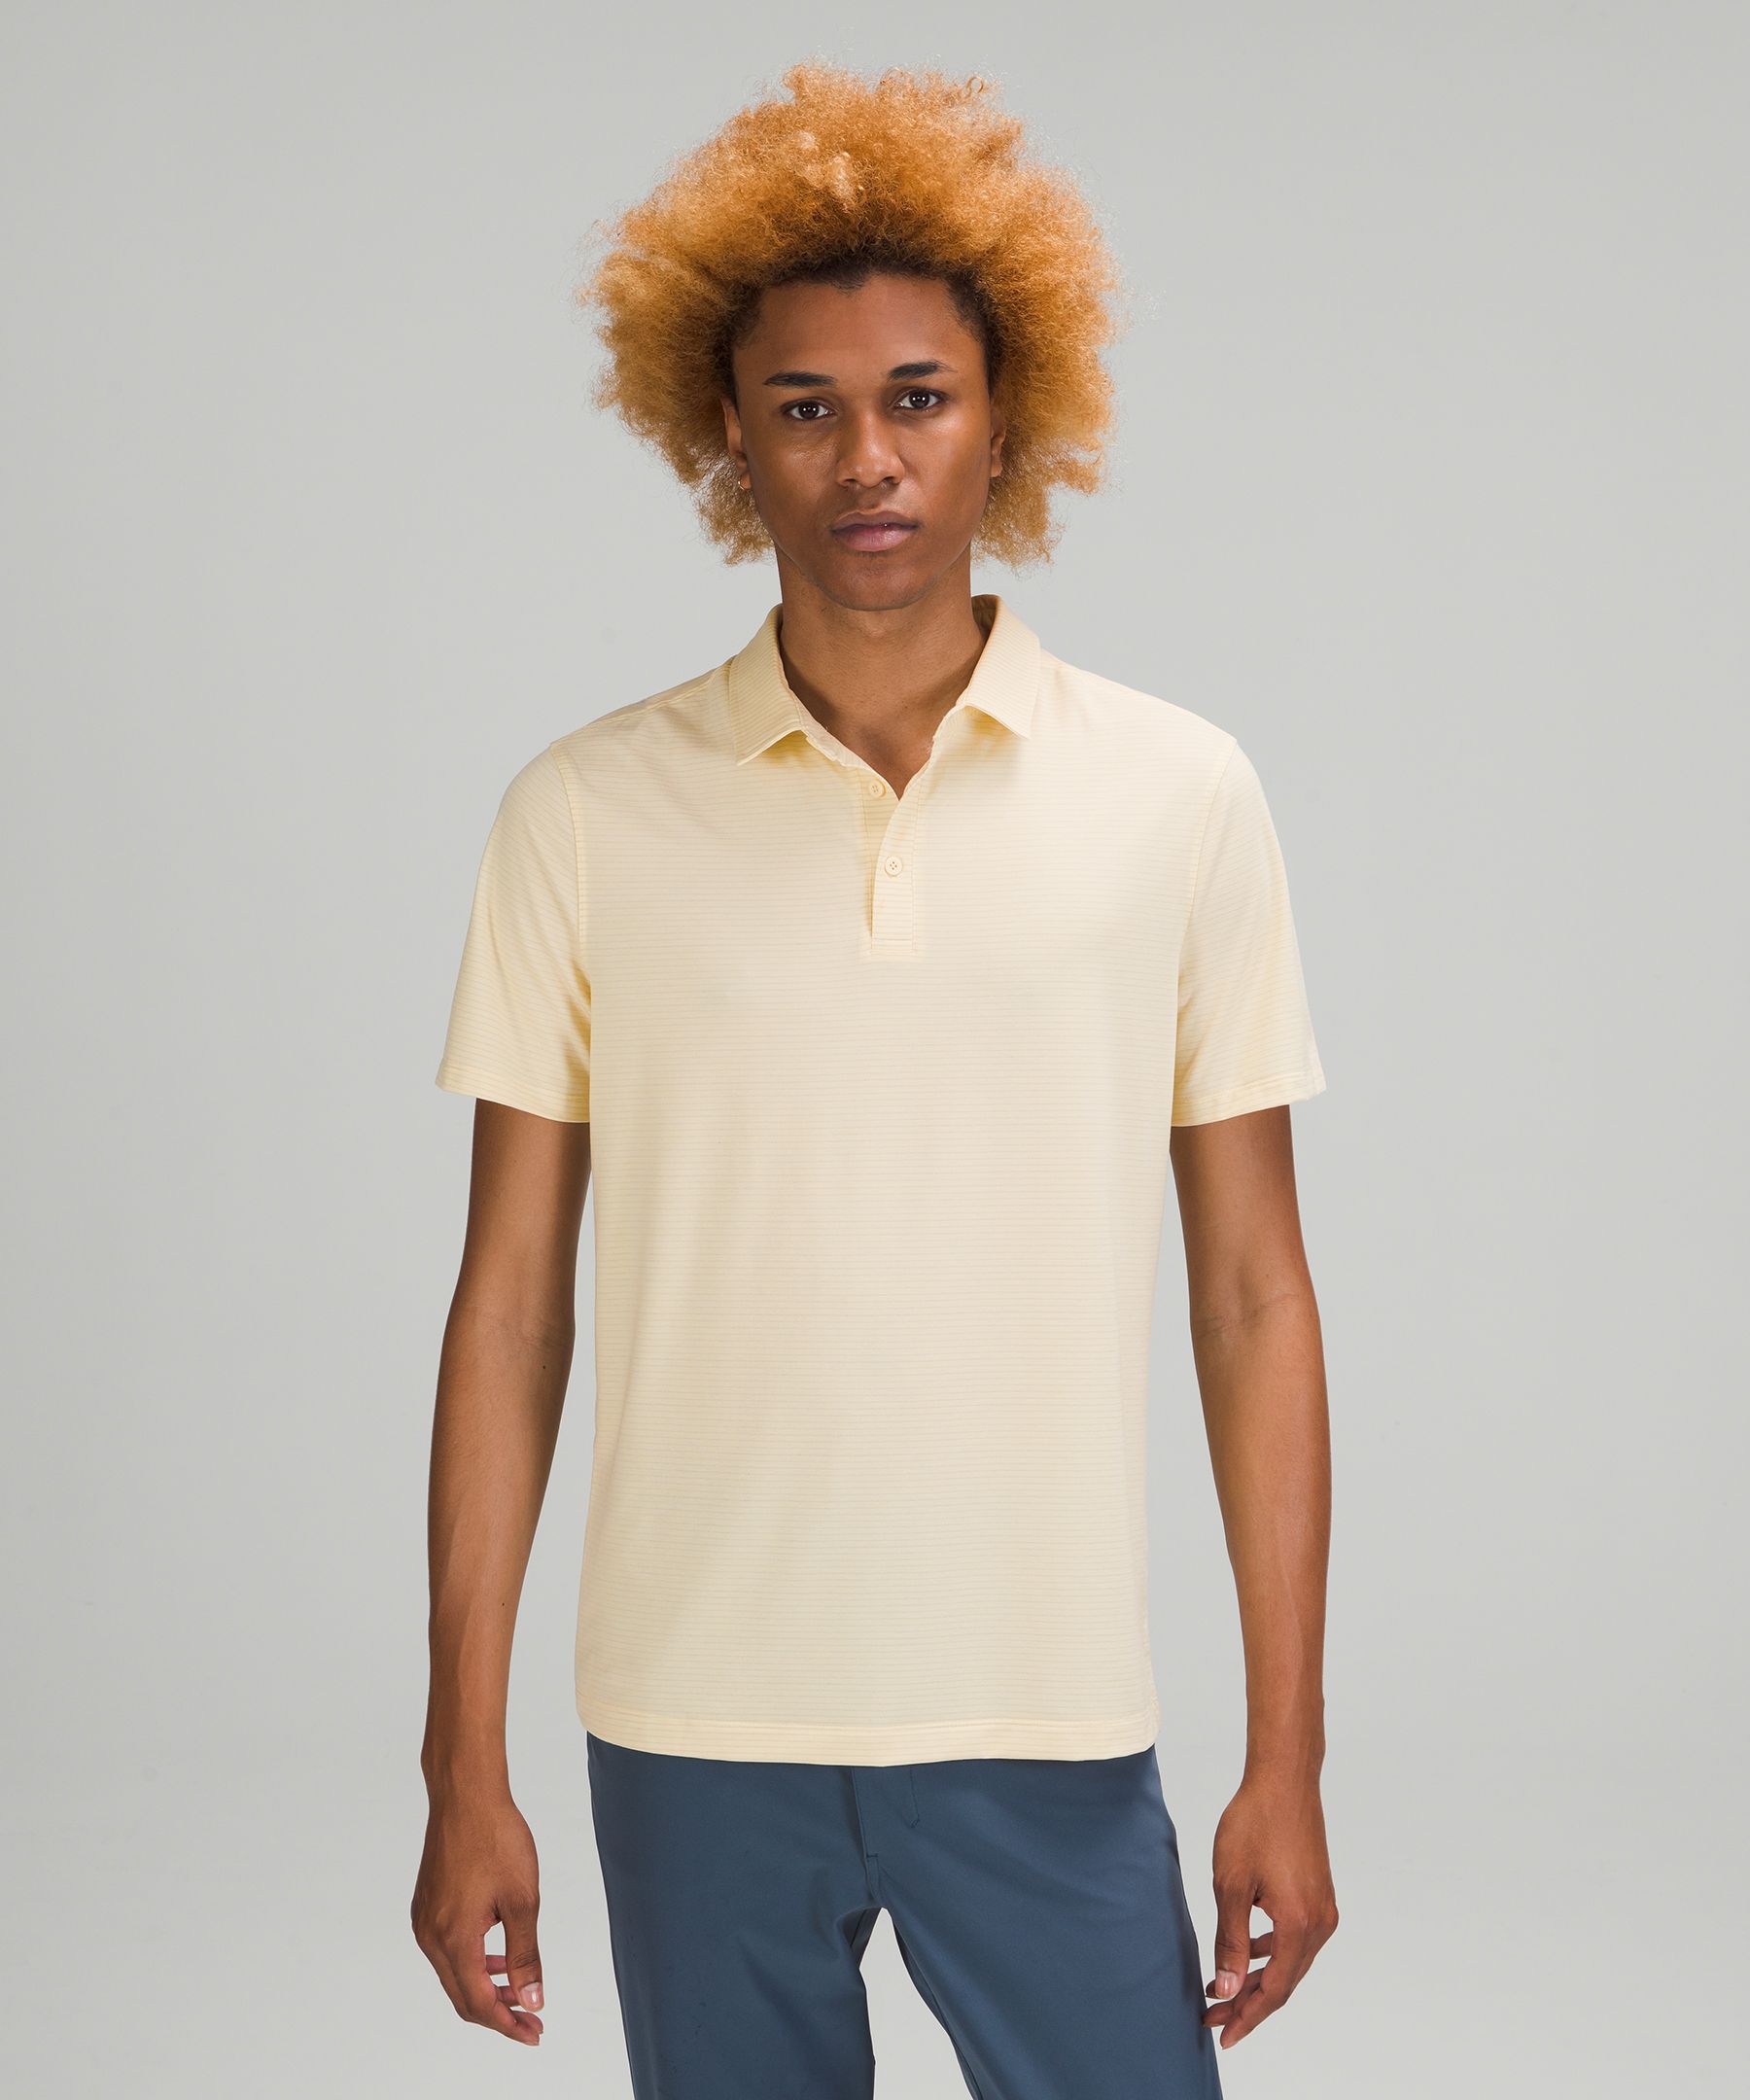 Lululemon Evolution Short Sleeve Polo Shirt In Heathered Lemon Chiffon